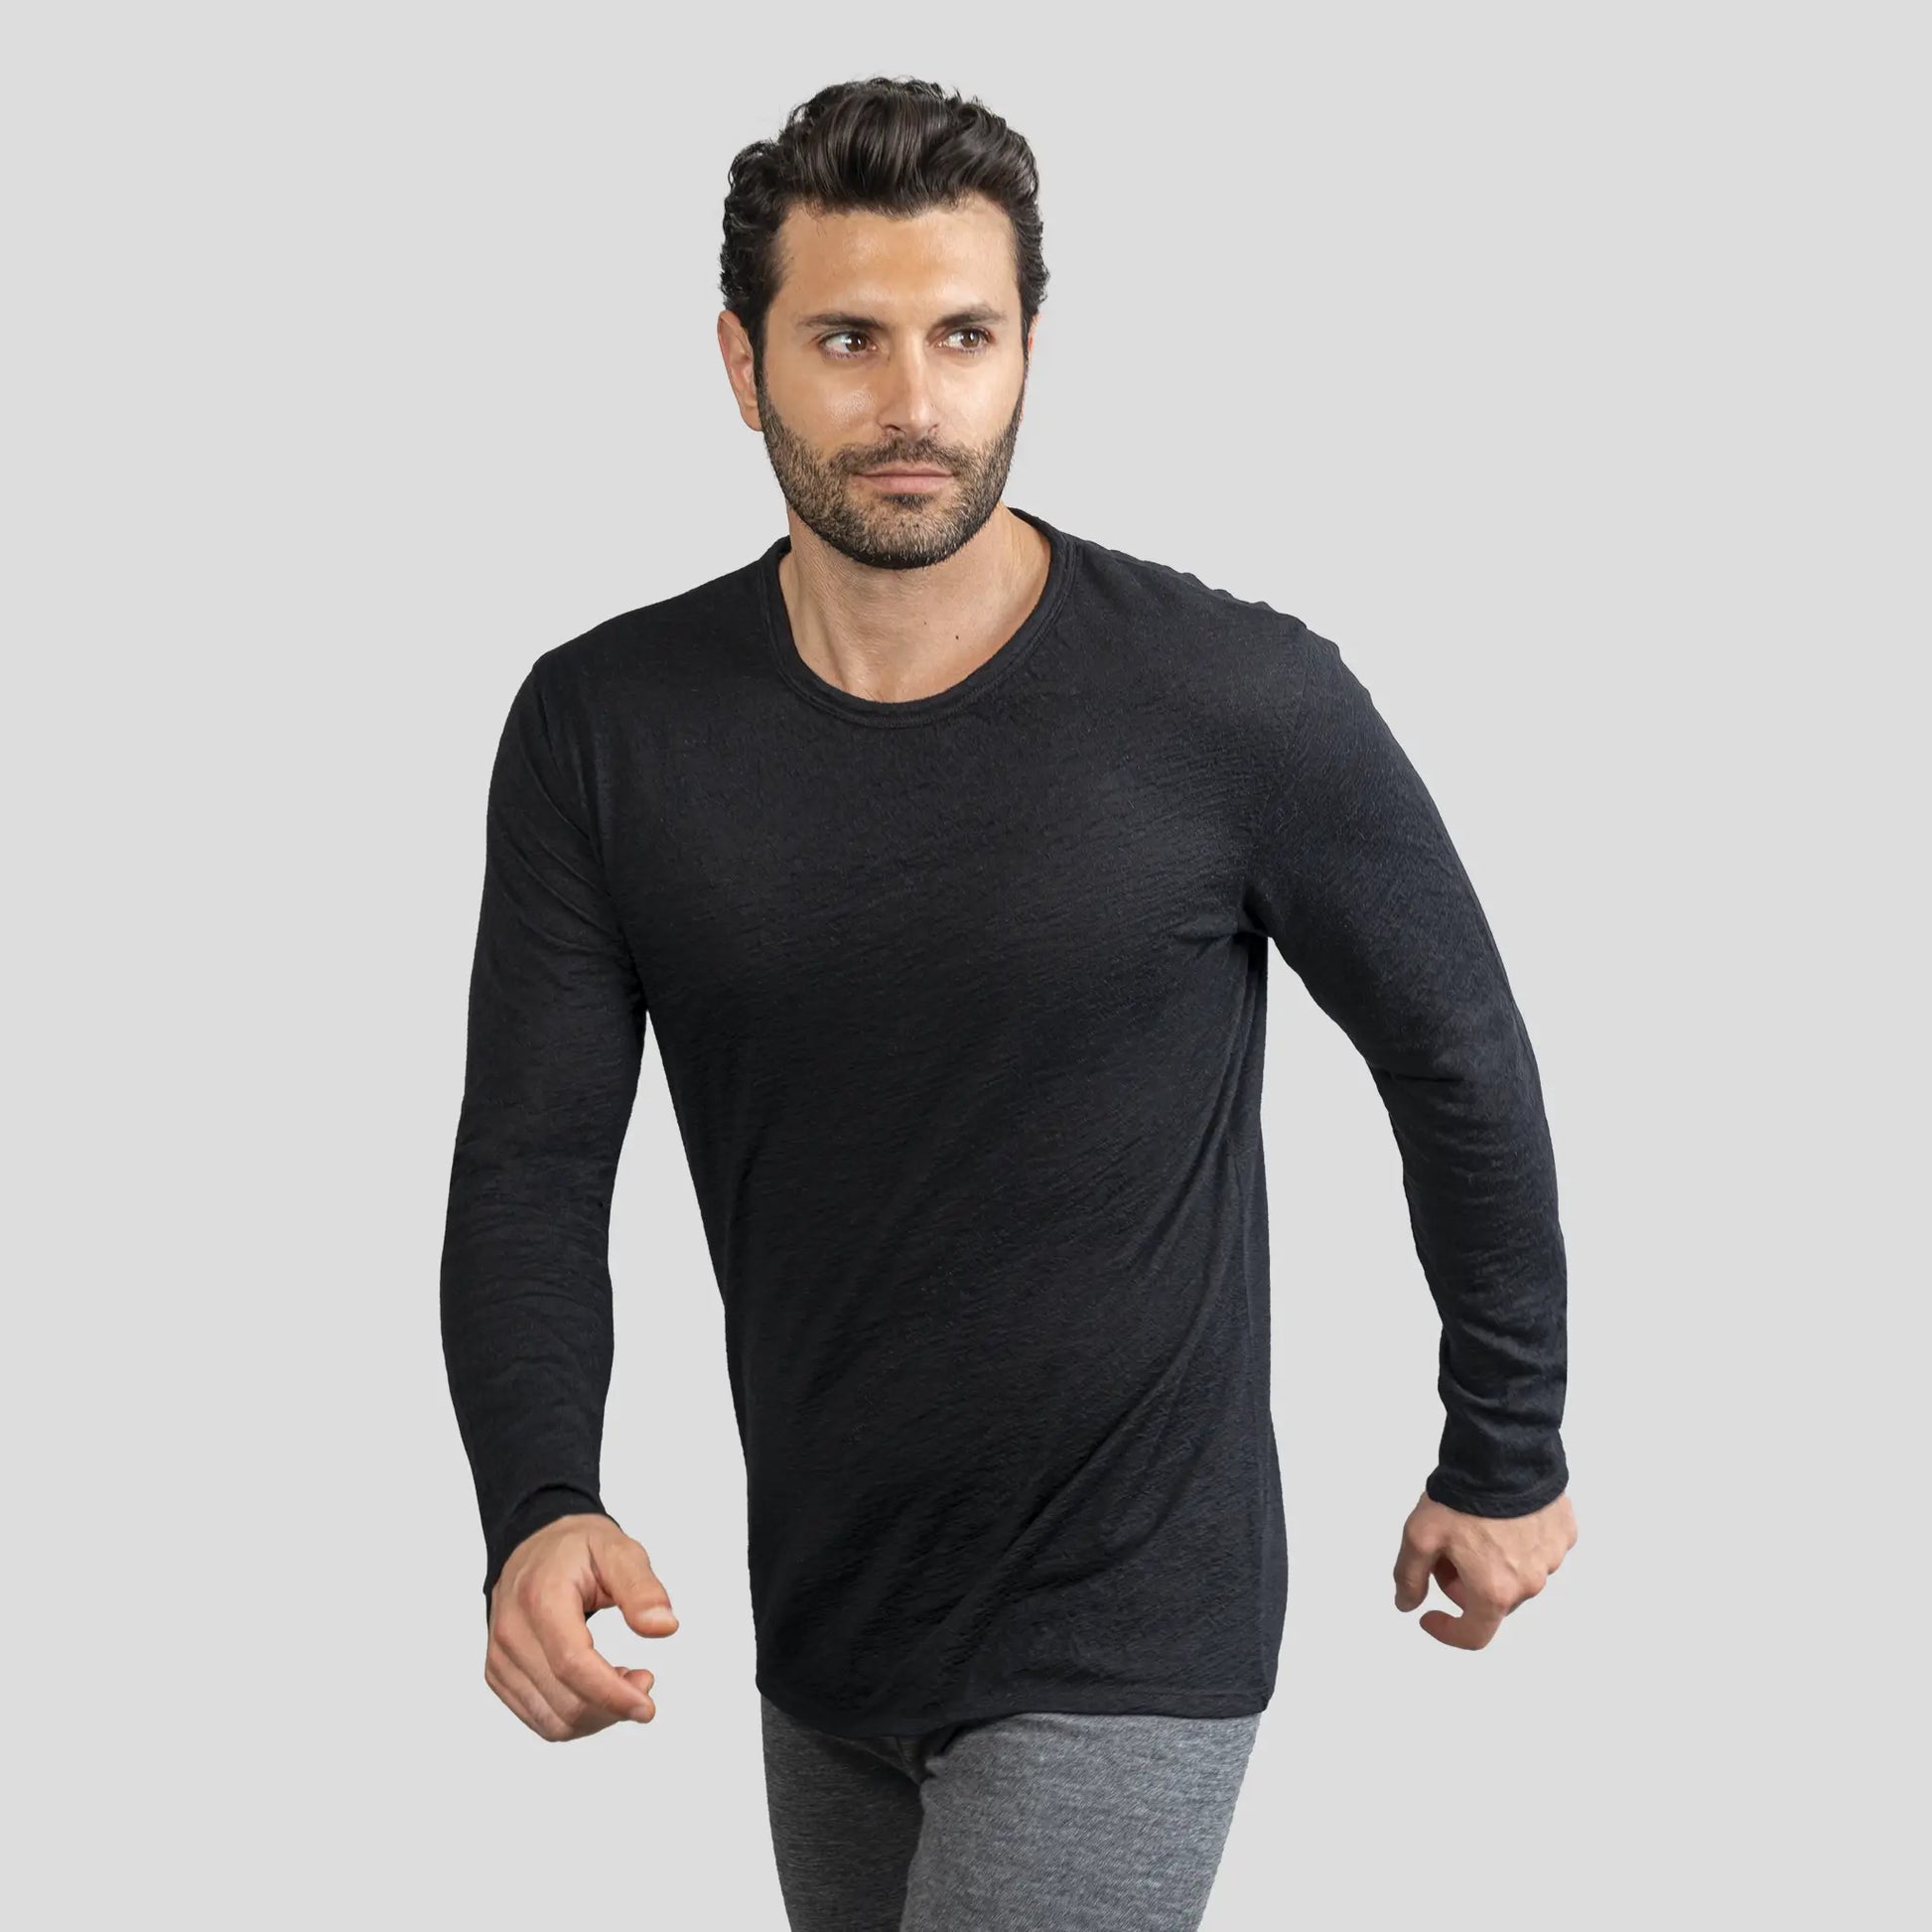 Men's Performance Long Sleeve Shirt, Men's Agricultural Workwear